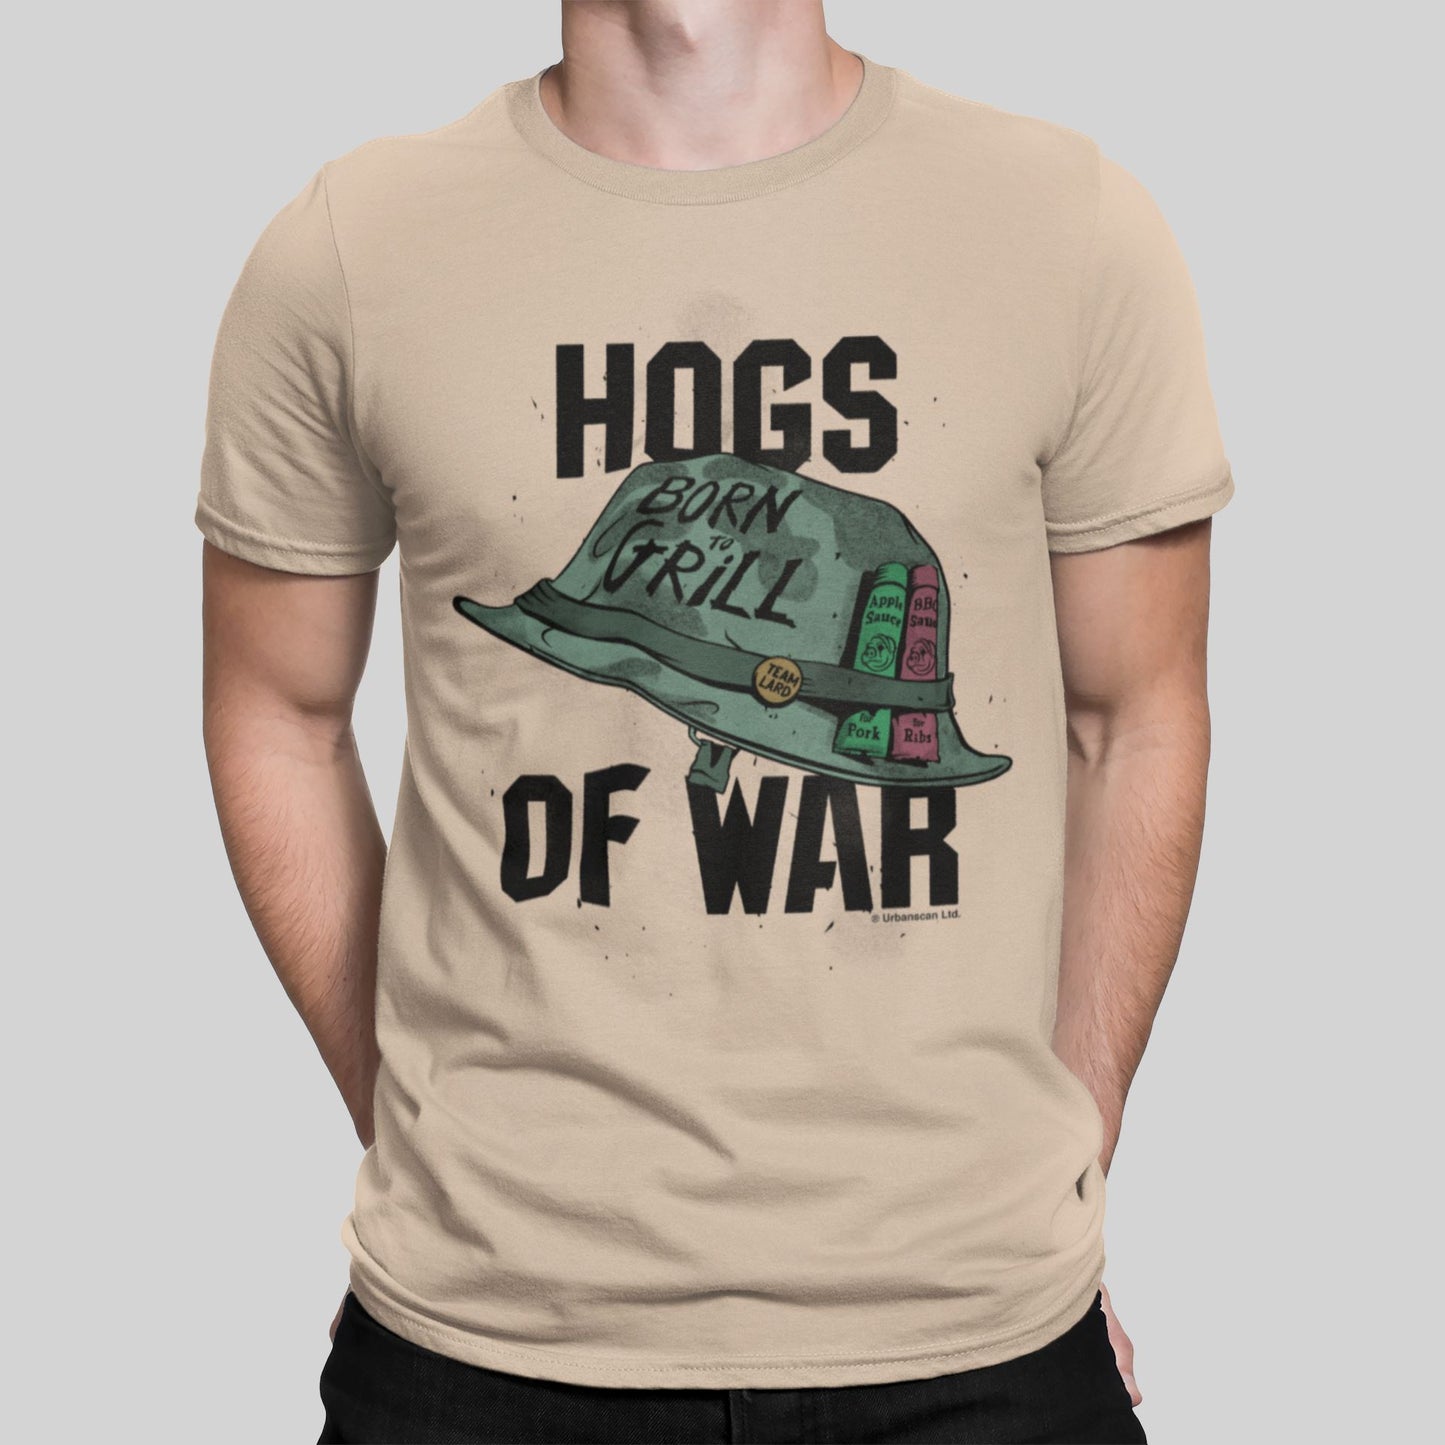 Hogs of War Retro Gaming T-Shirt T-Shirt Seven Squared Small 34-36" Natural 